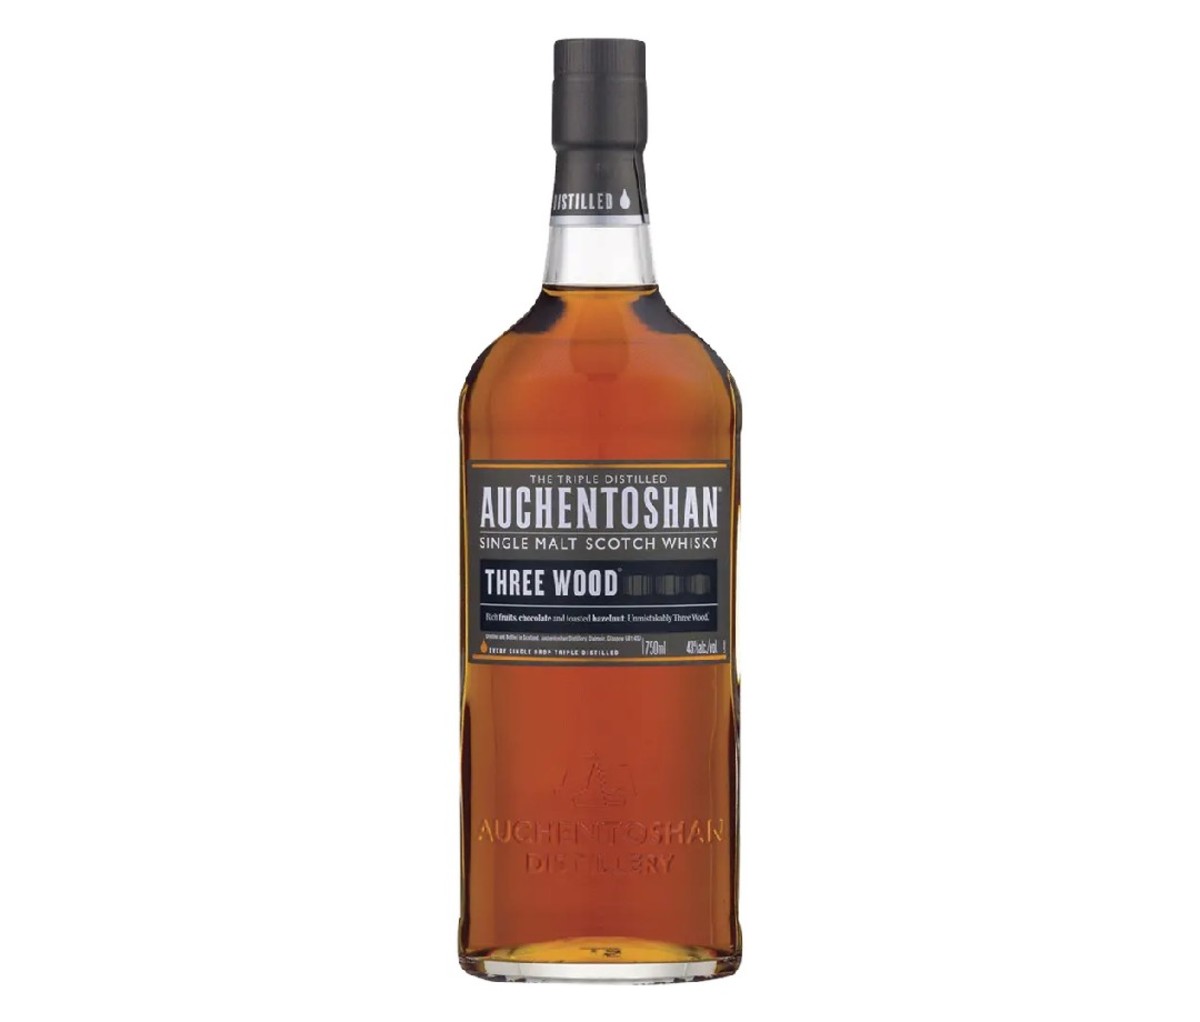 A bottle of Auchentoshan Three Wood whisky.